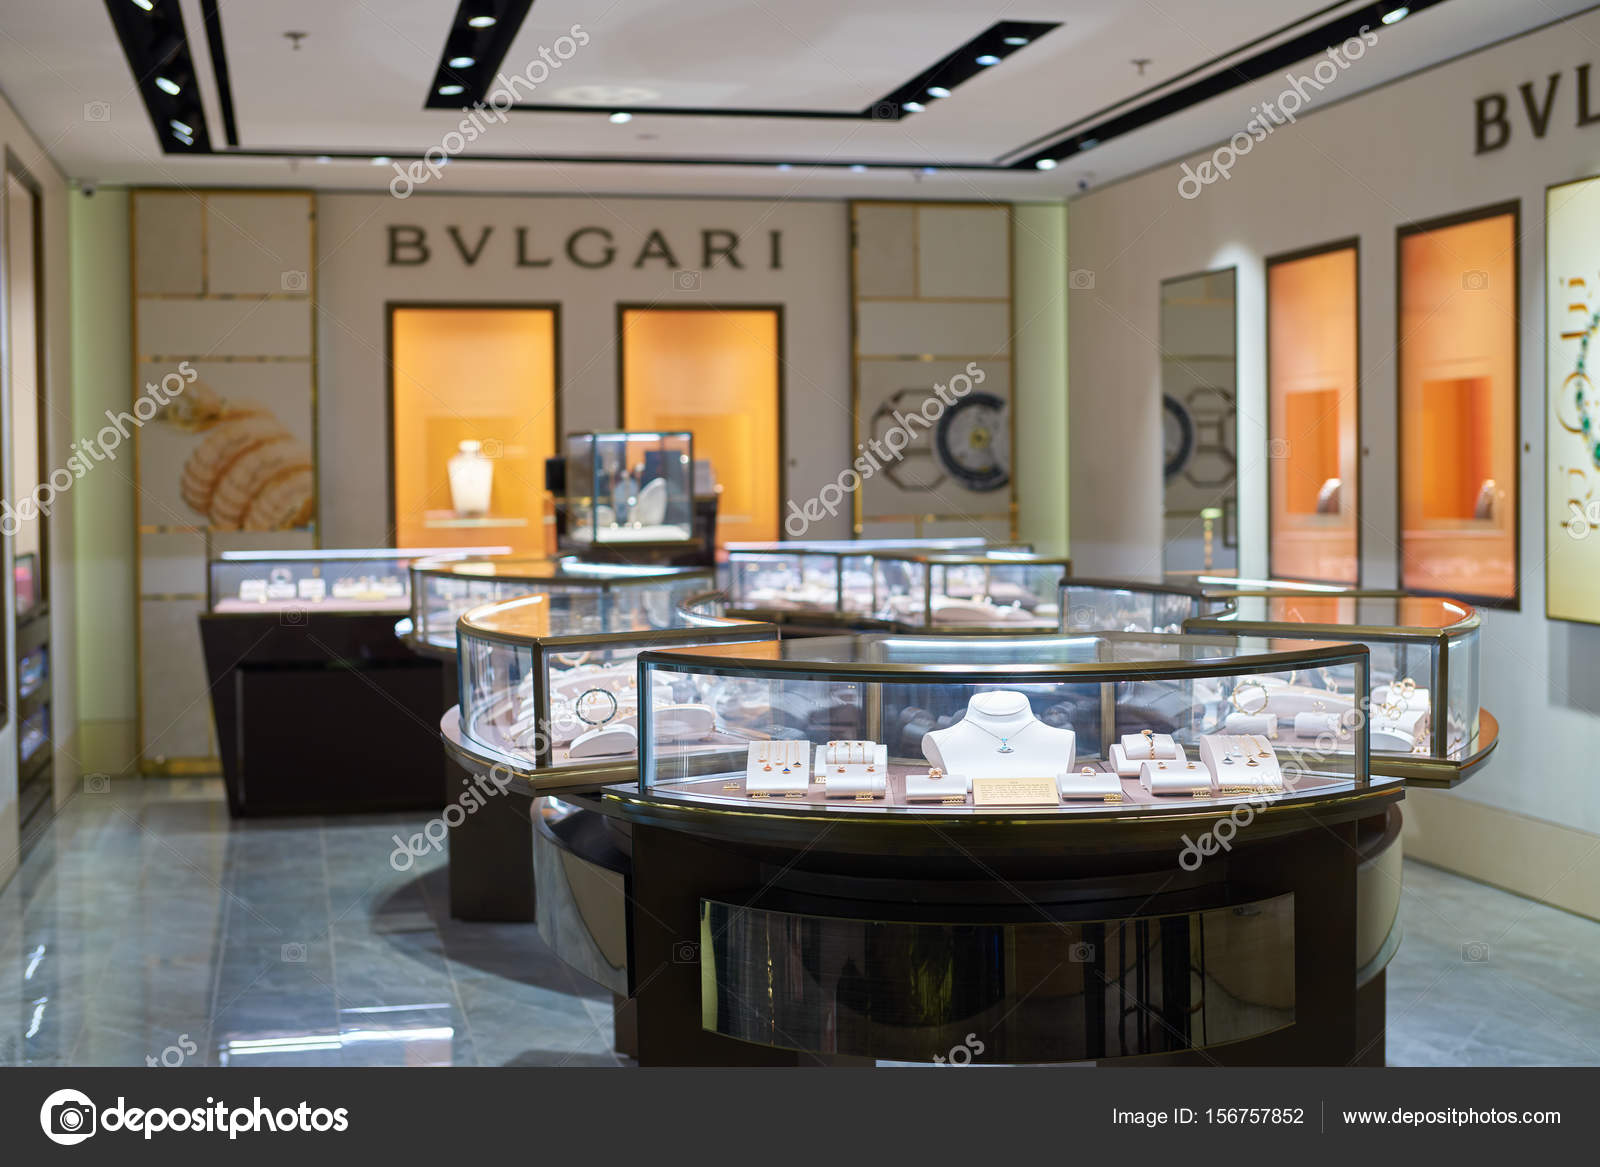 bulgari store in qatar